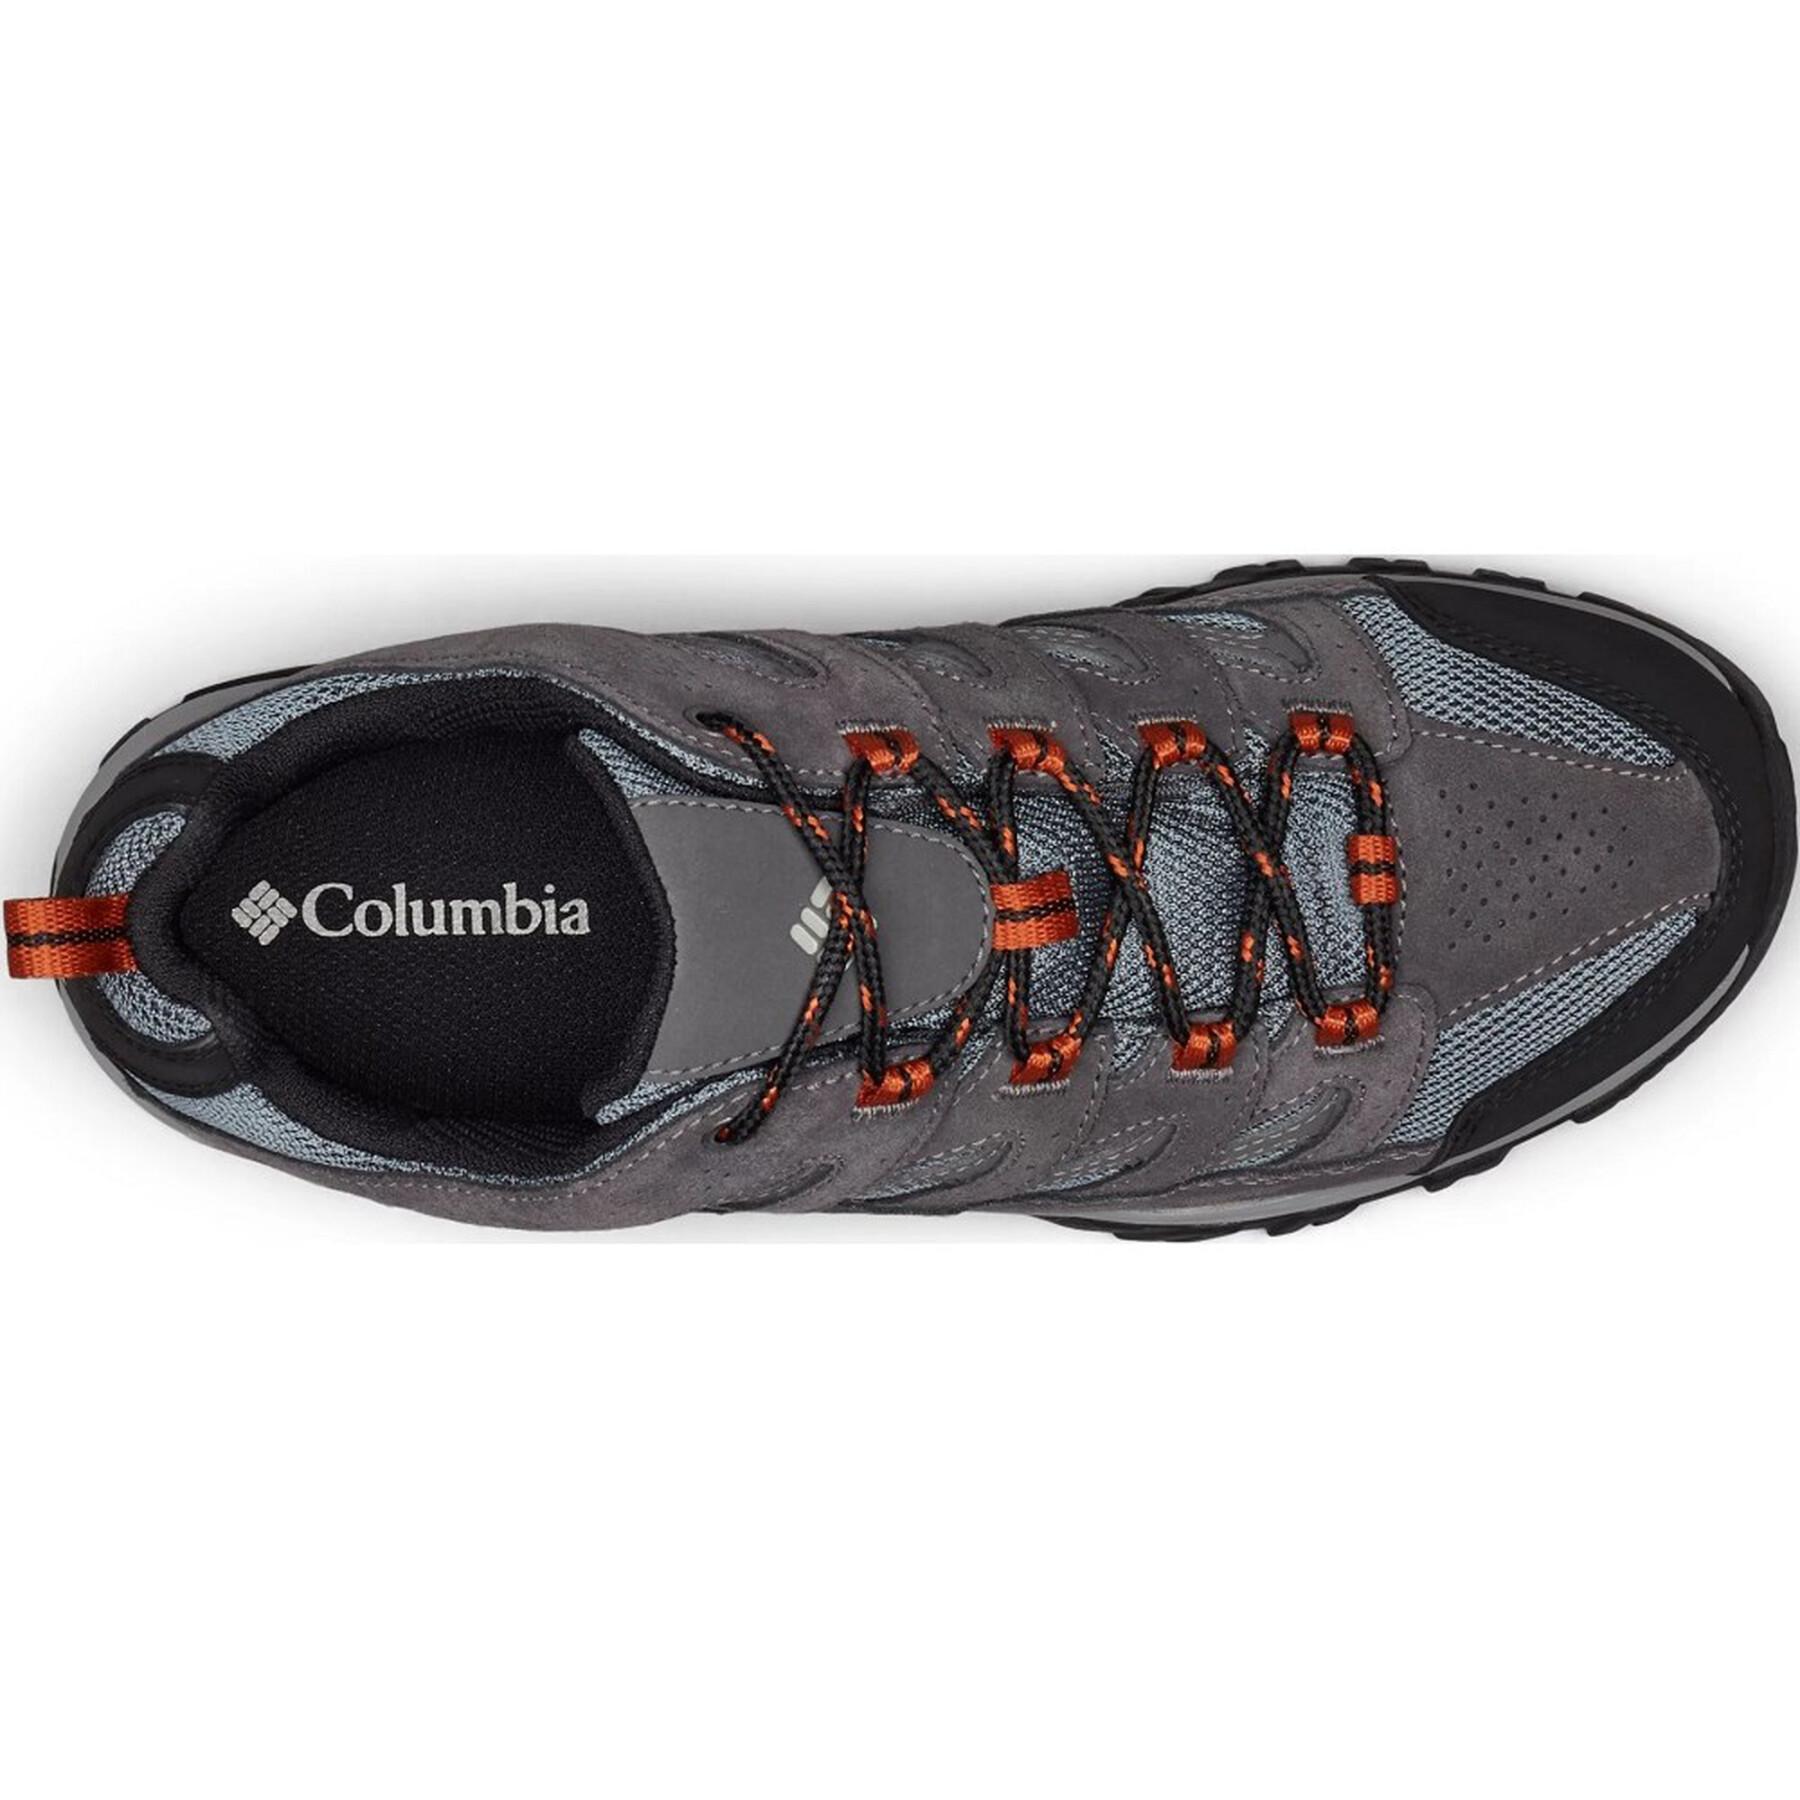 Shoes Columbia Crestwood waterproof